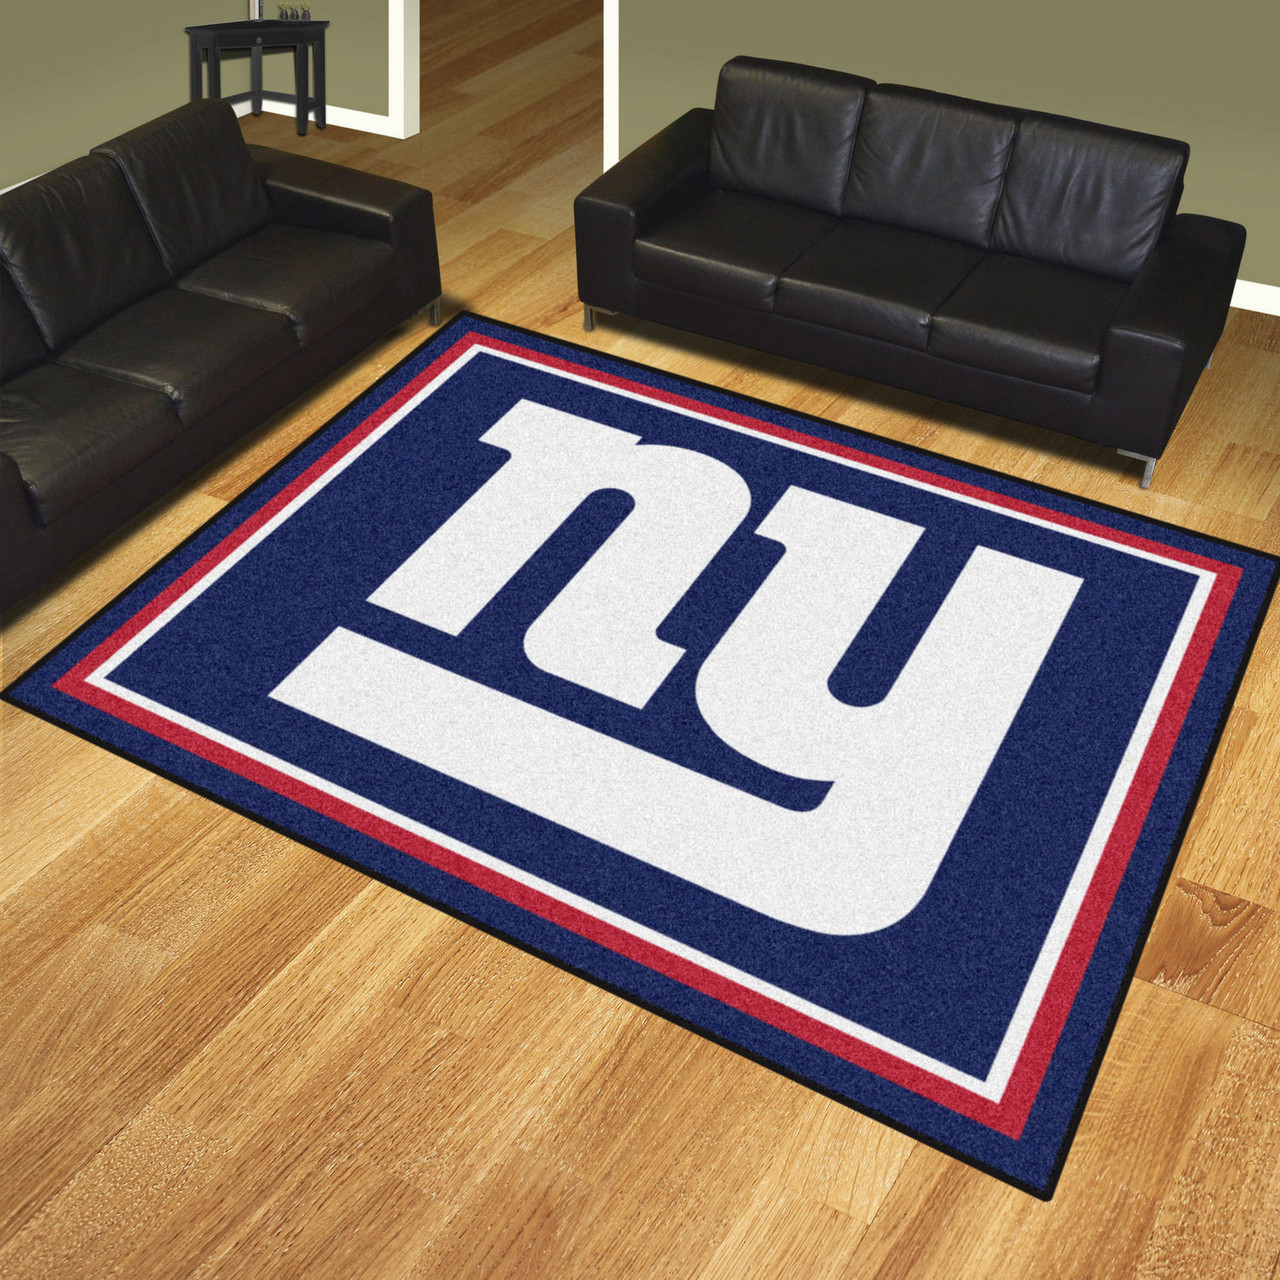 8' x 10' New York Giants Blue Rectangle Rug Floor Rug Area Rug NFL